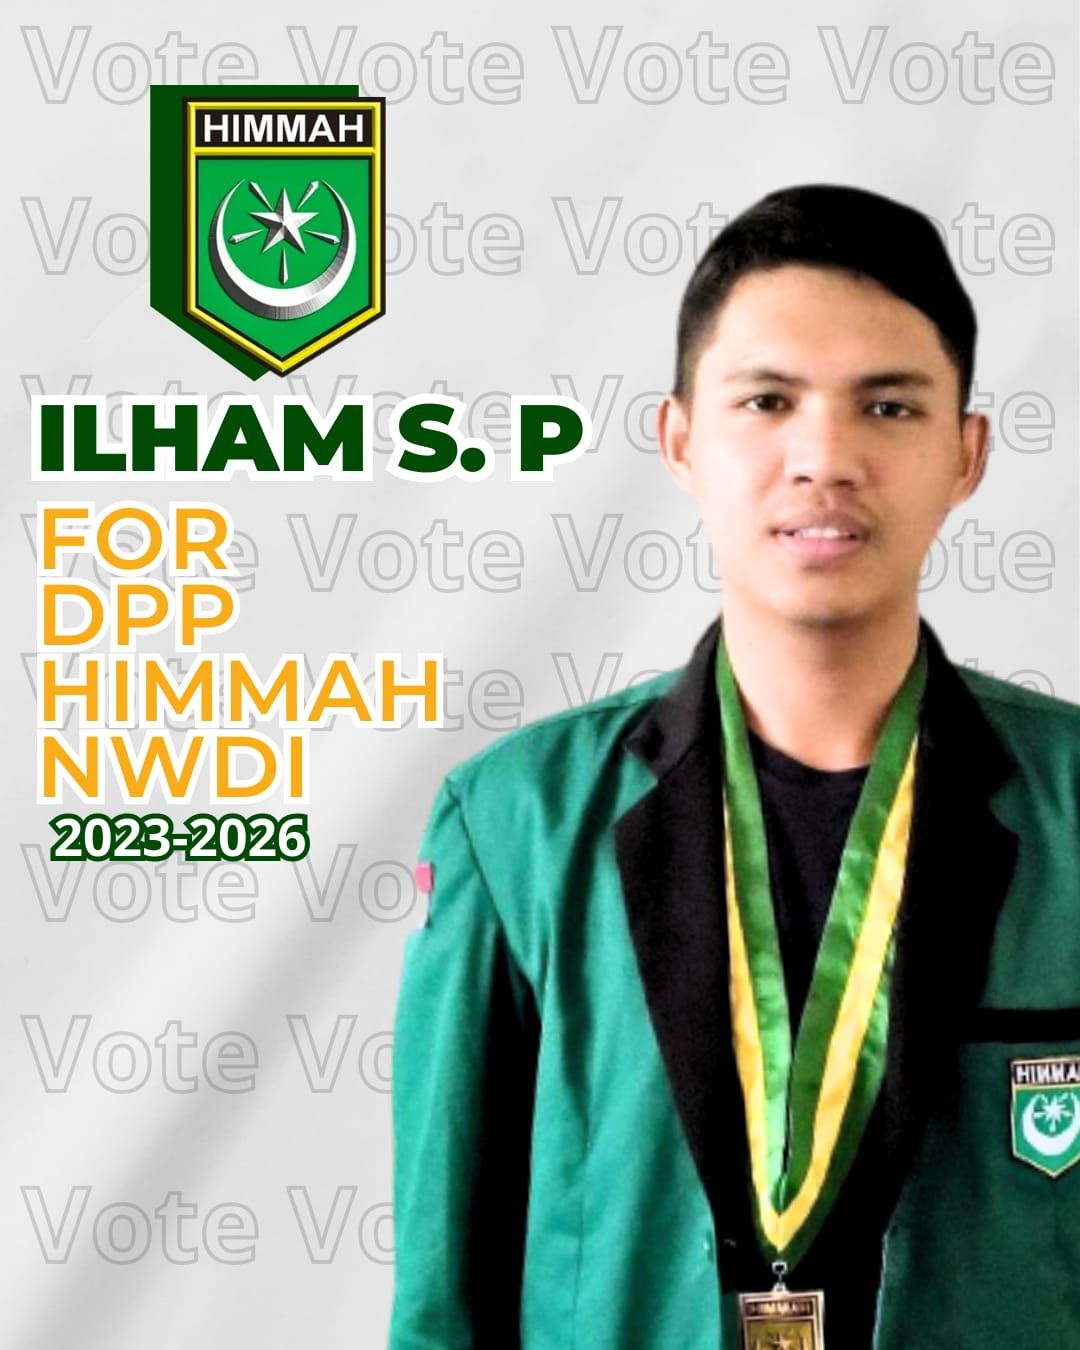  pendaftaran pencalonan Ilham, SP kepada Panitia Kongres HIMMAH NWDI